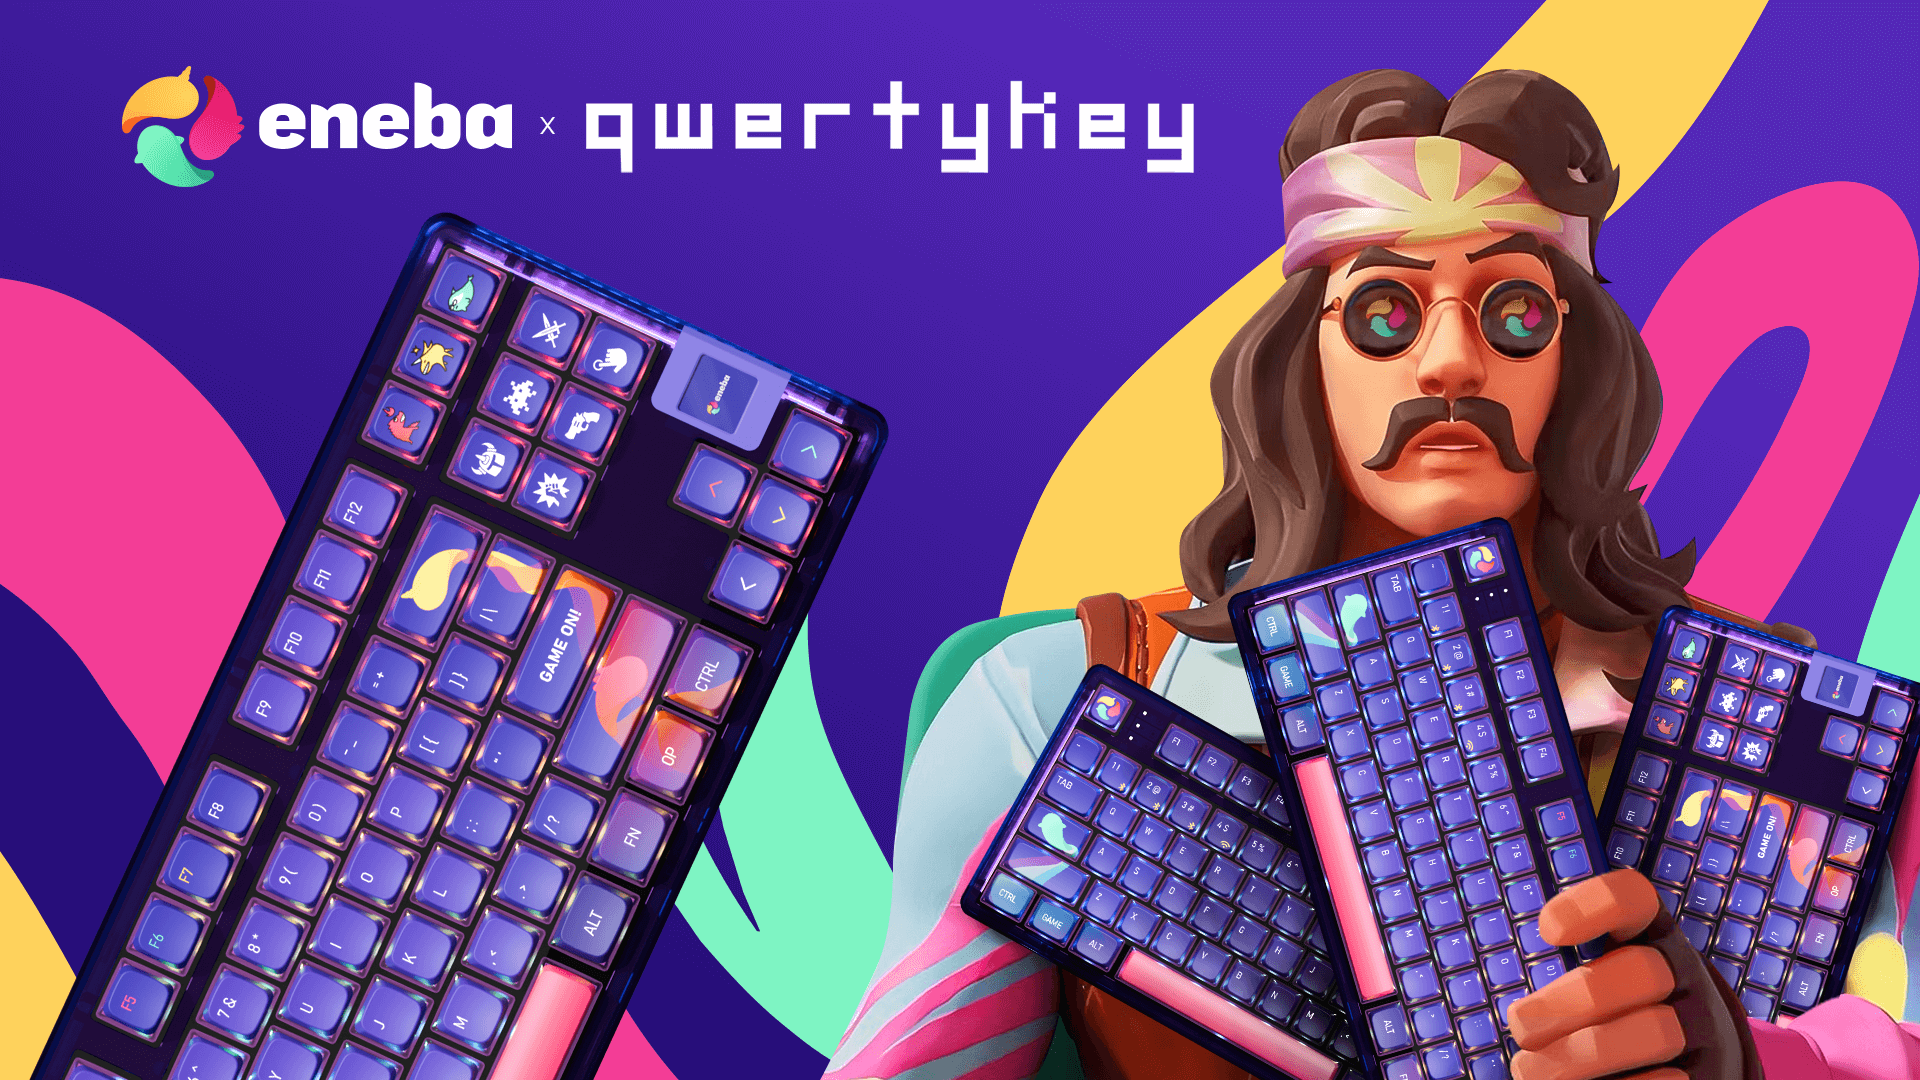 Eneba x Qwertykey keyboard